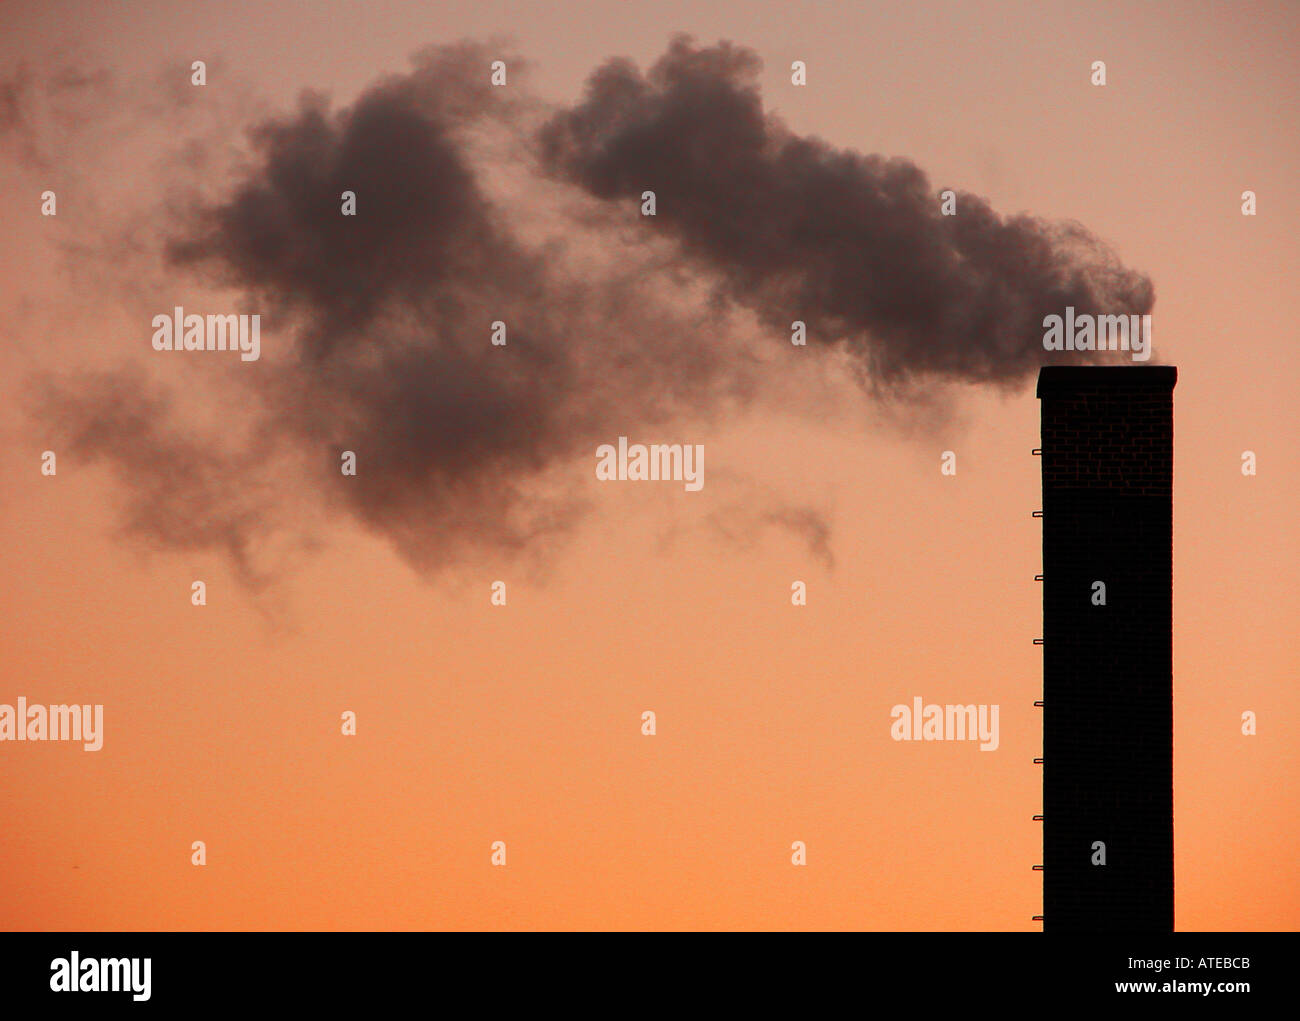 Smoke stacks and smoke during evening hours Stock Photo